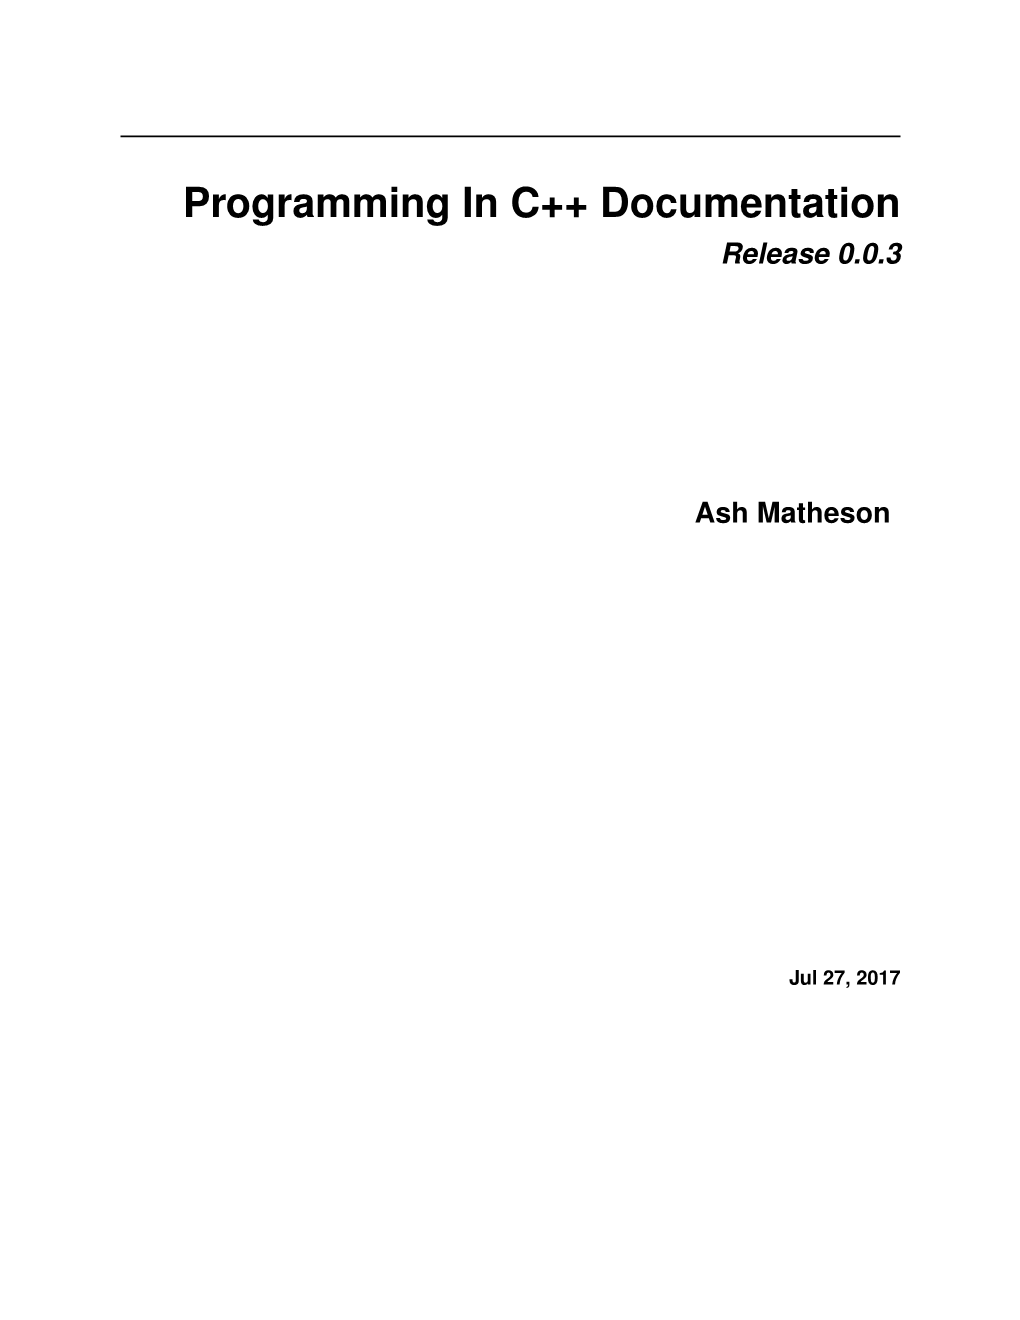 Programming in C++ Documentation Release 0.0.3